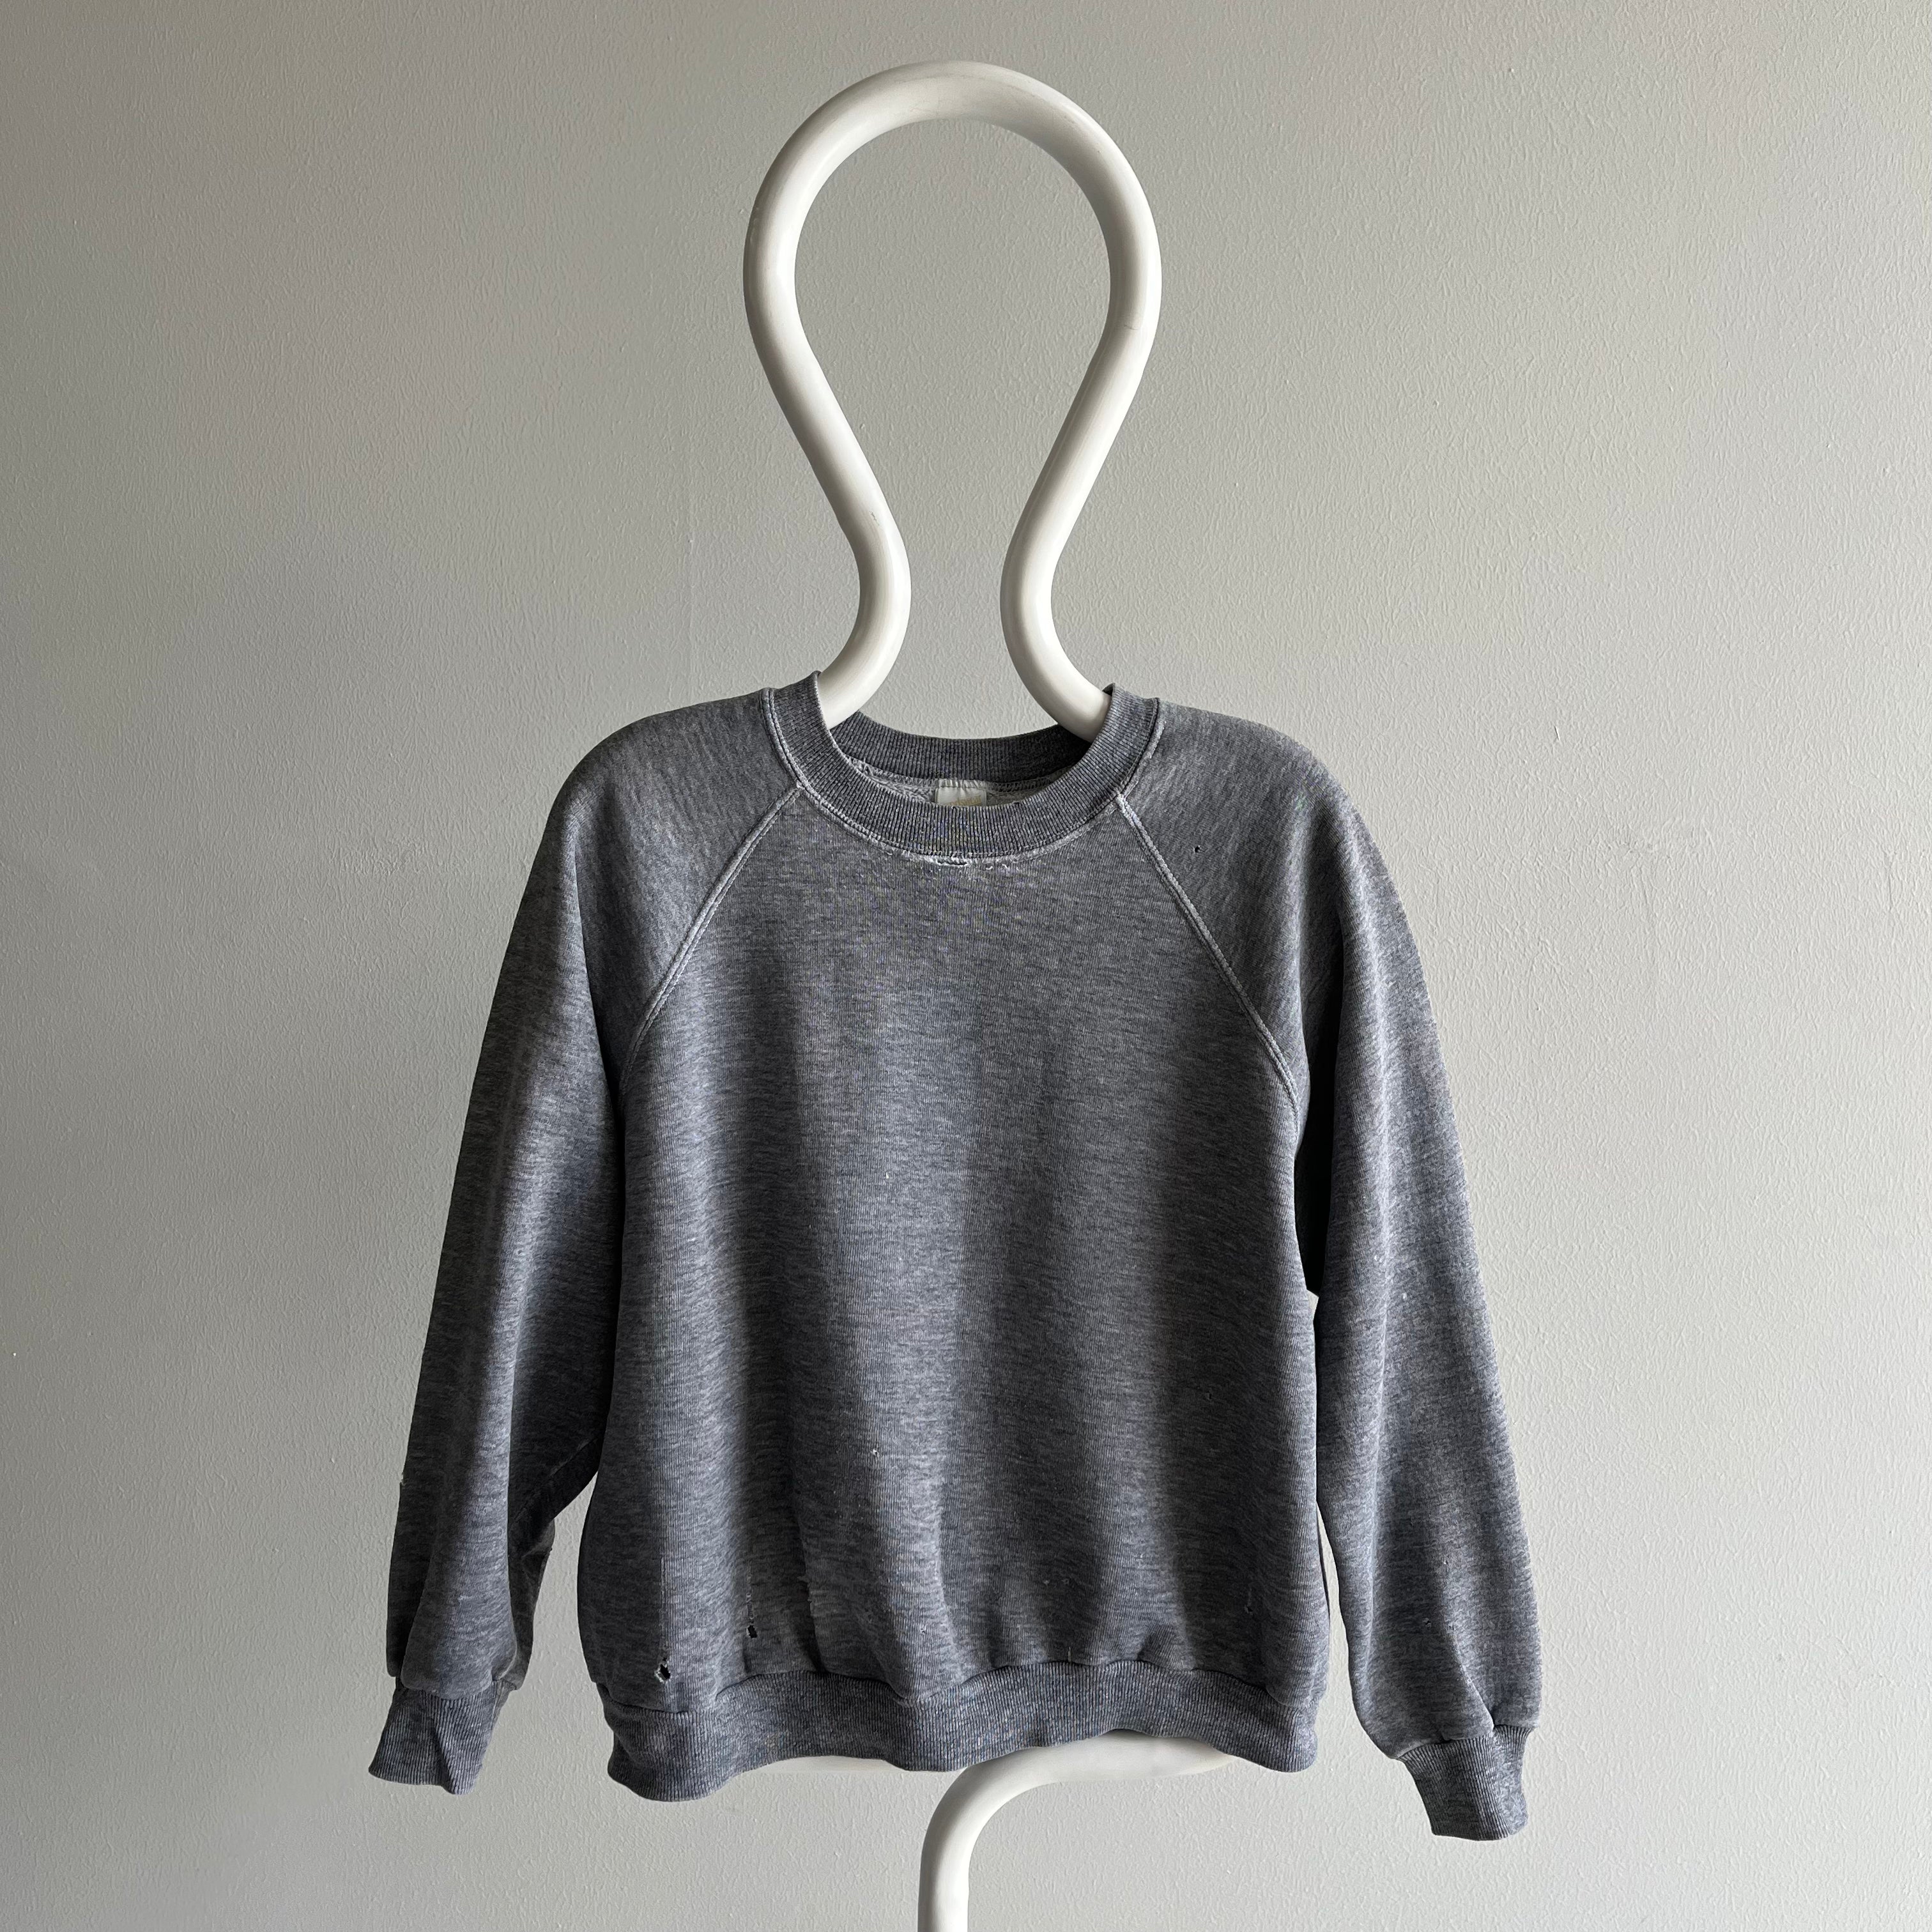 1970/80s Blank Tattered Sportswear Sweatshirt - Personal Collection